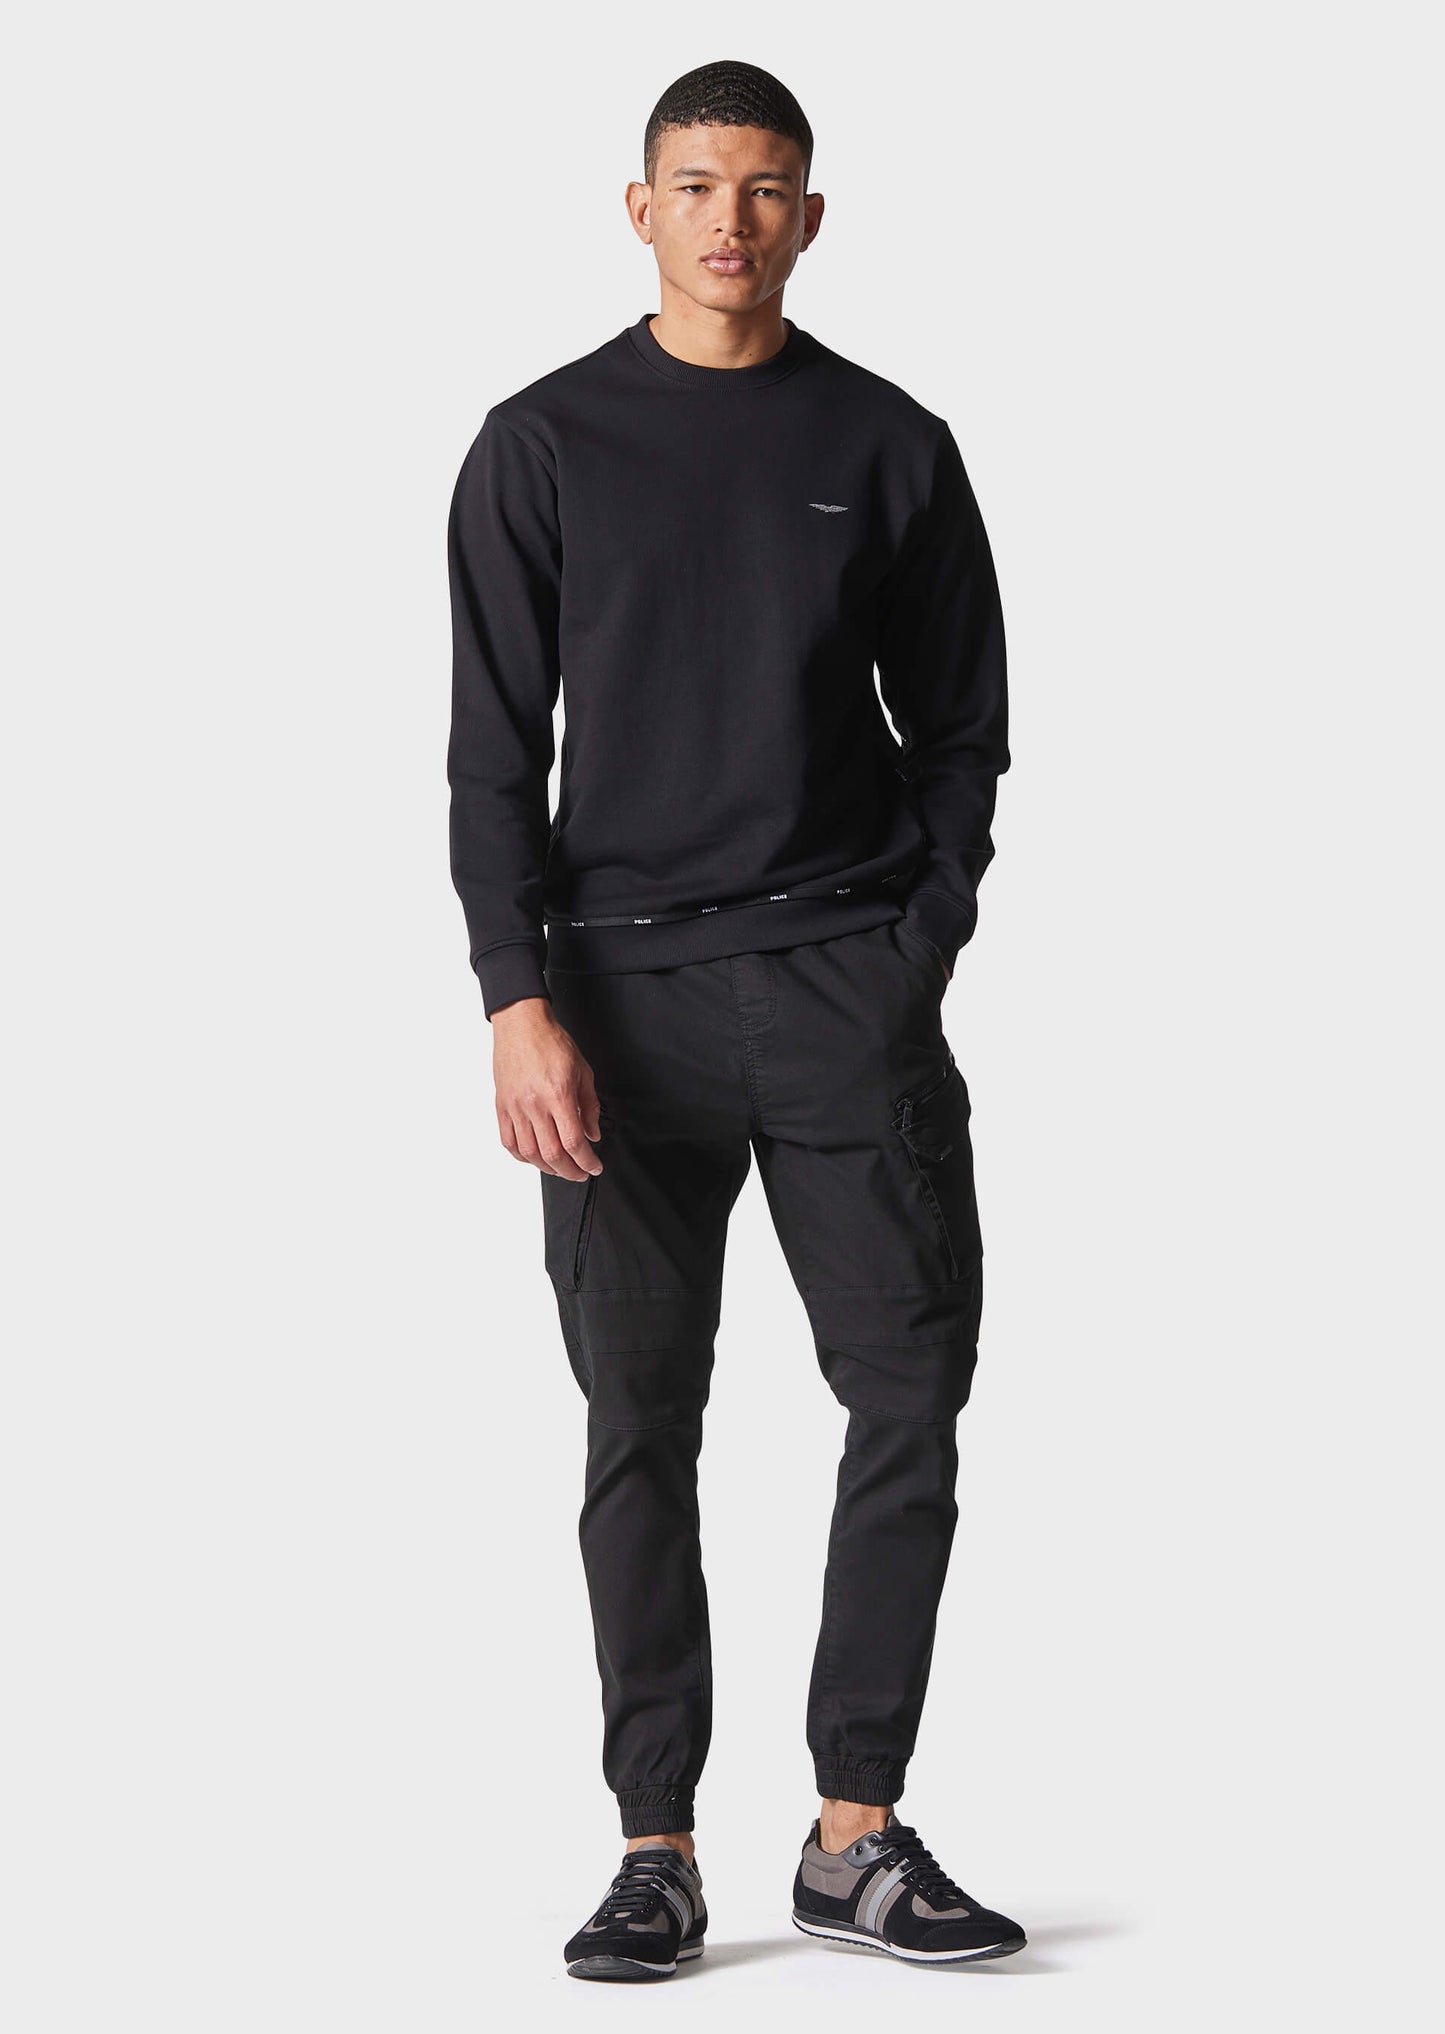 Kobi Black Sweatshirt